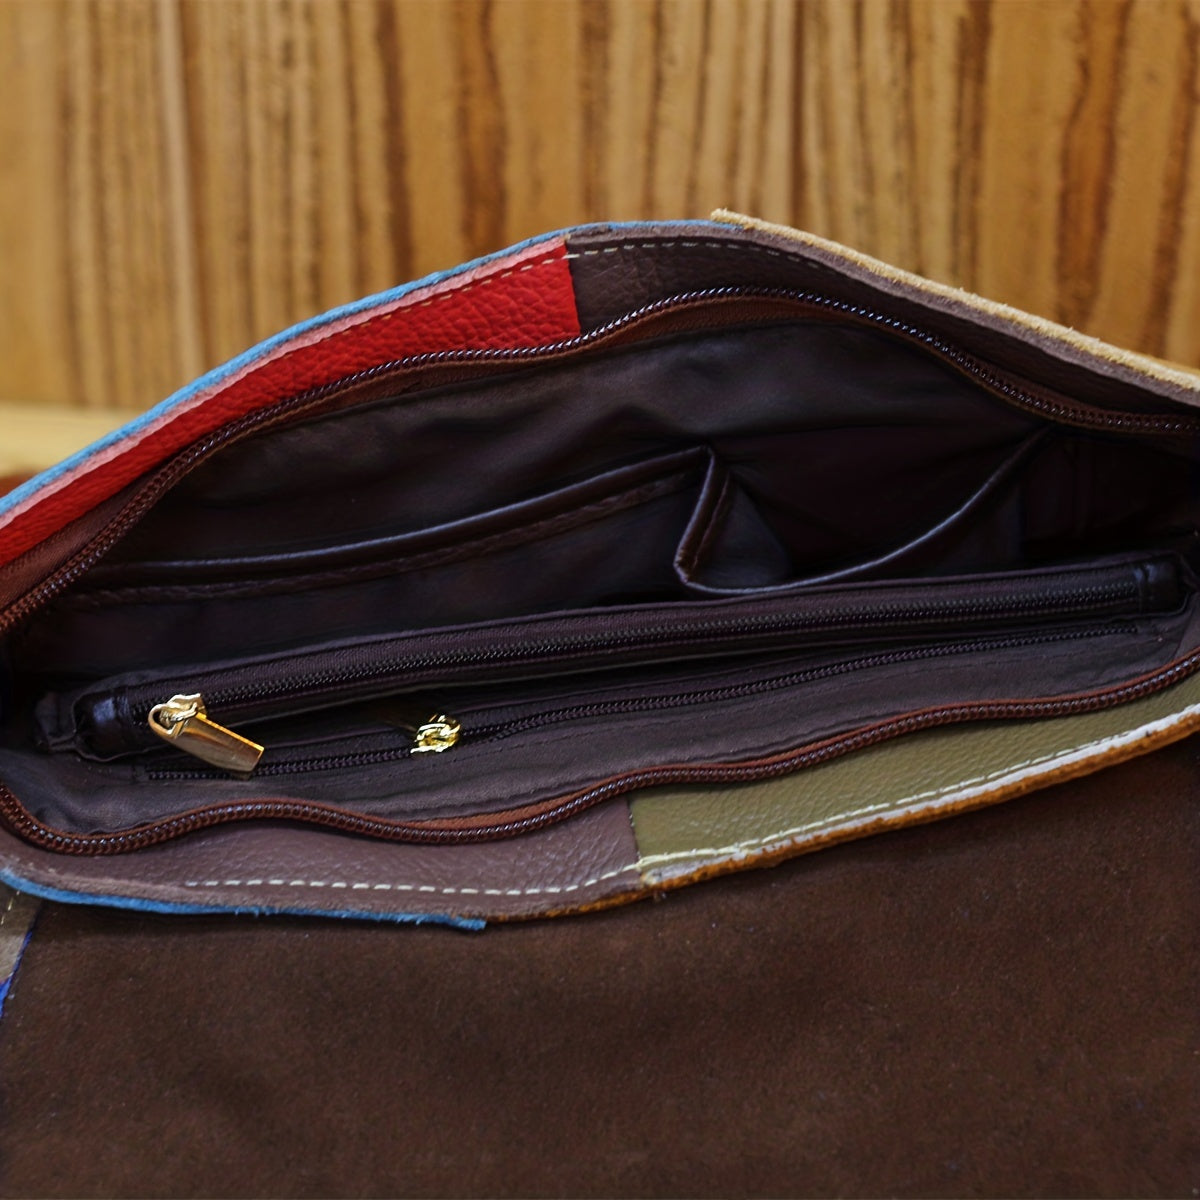 Trendy Genuine Leather Flap Crossbody Bag, Contrast Color Argyle Plaid Shoulder Bag, Perfect Messenger Bag For Daily Use